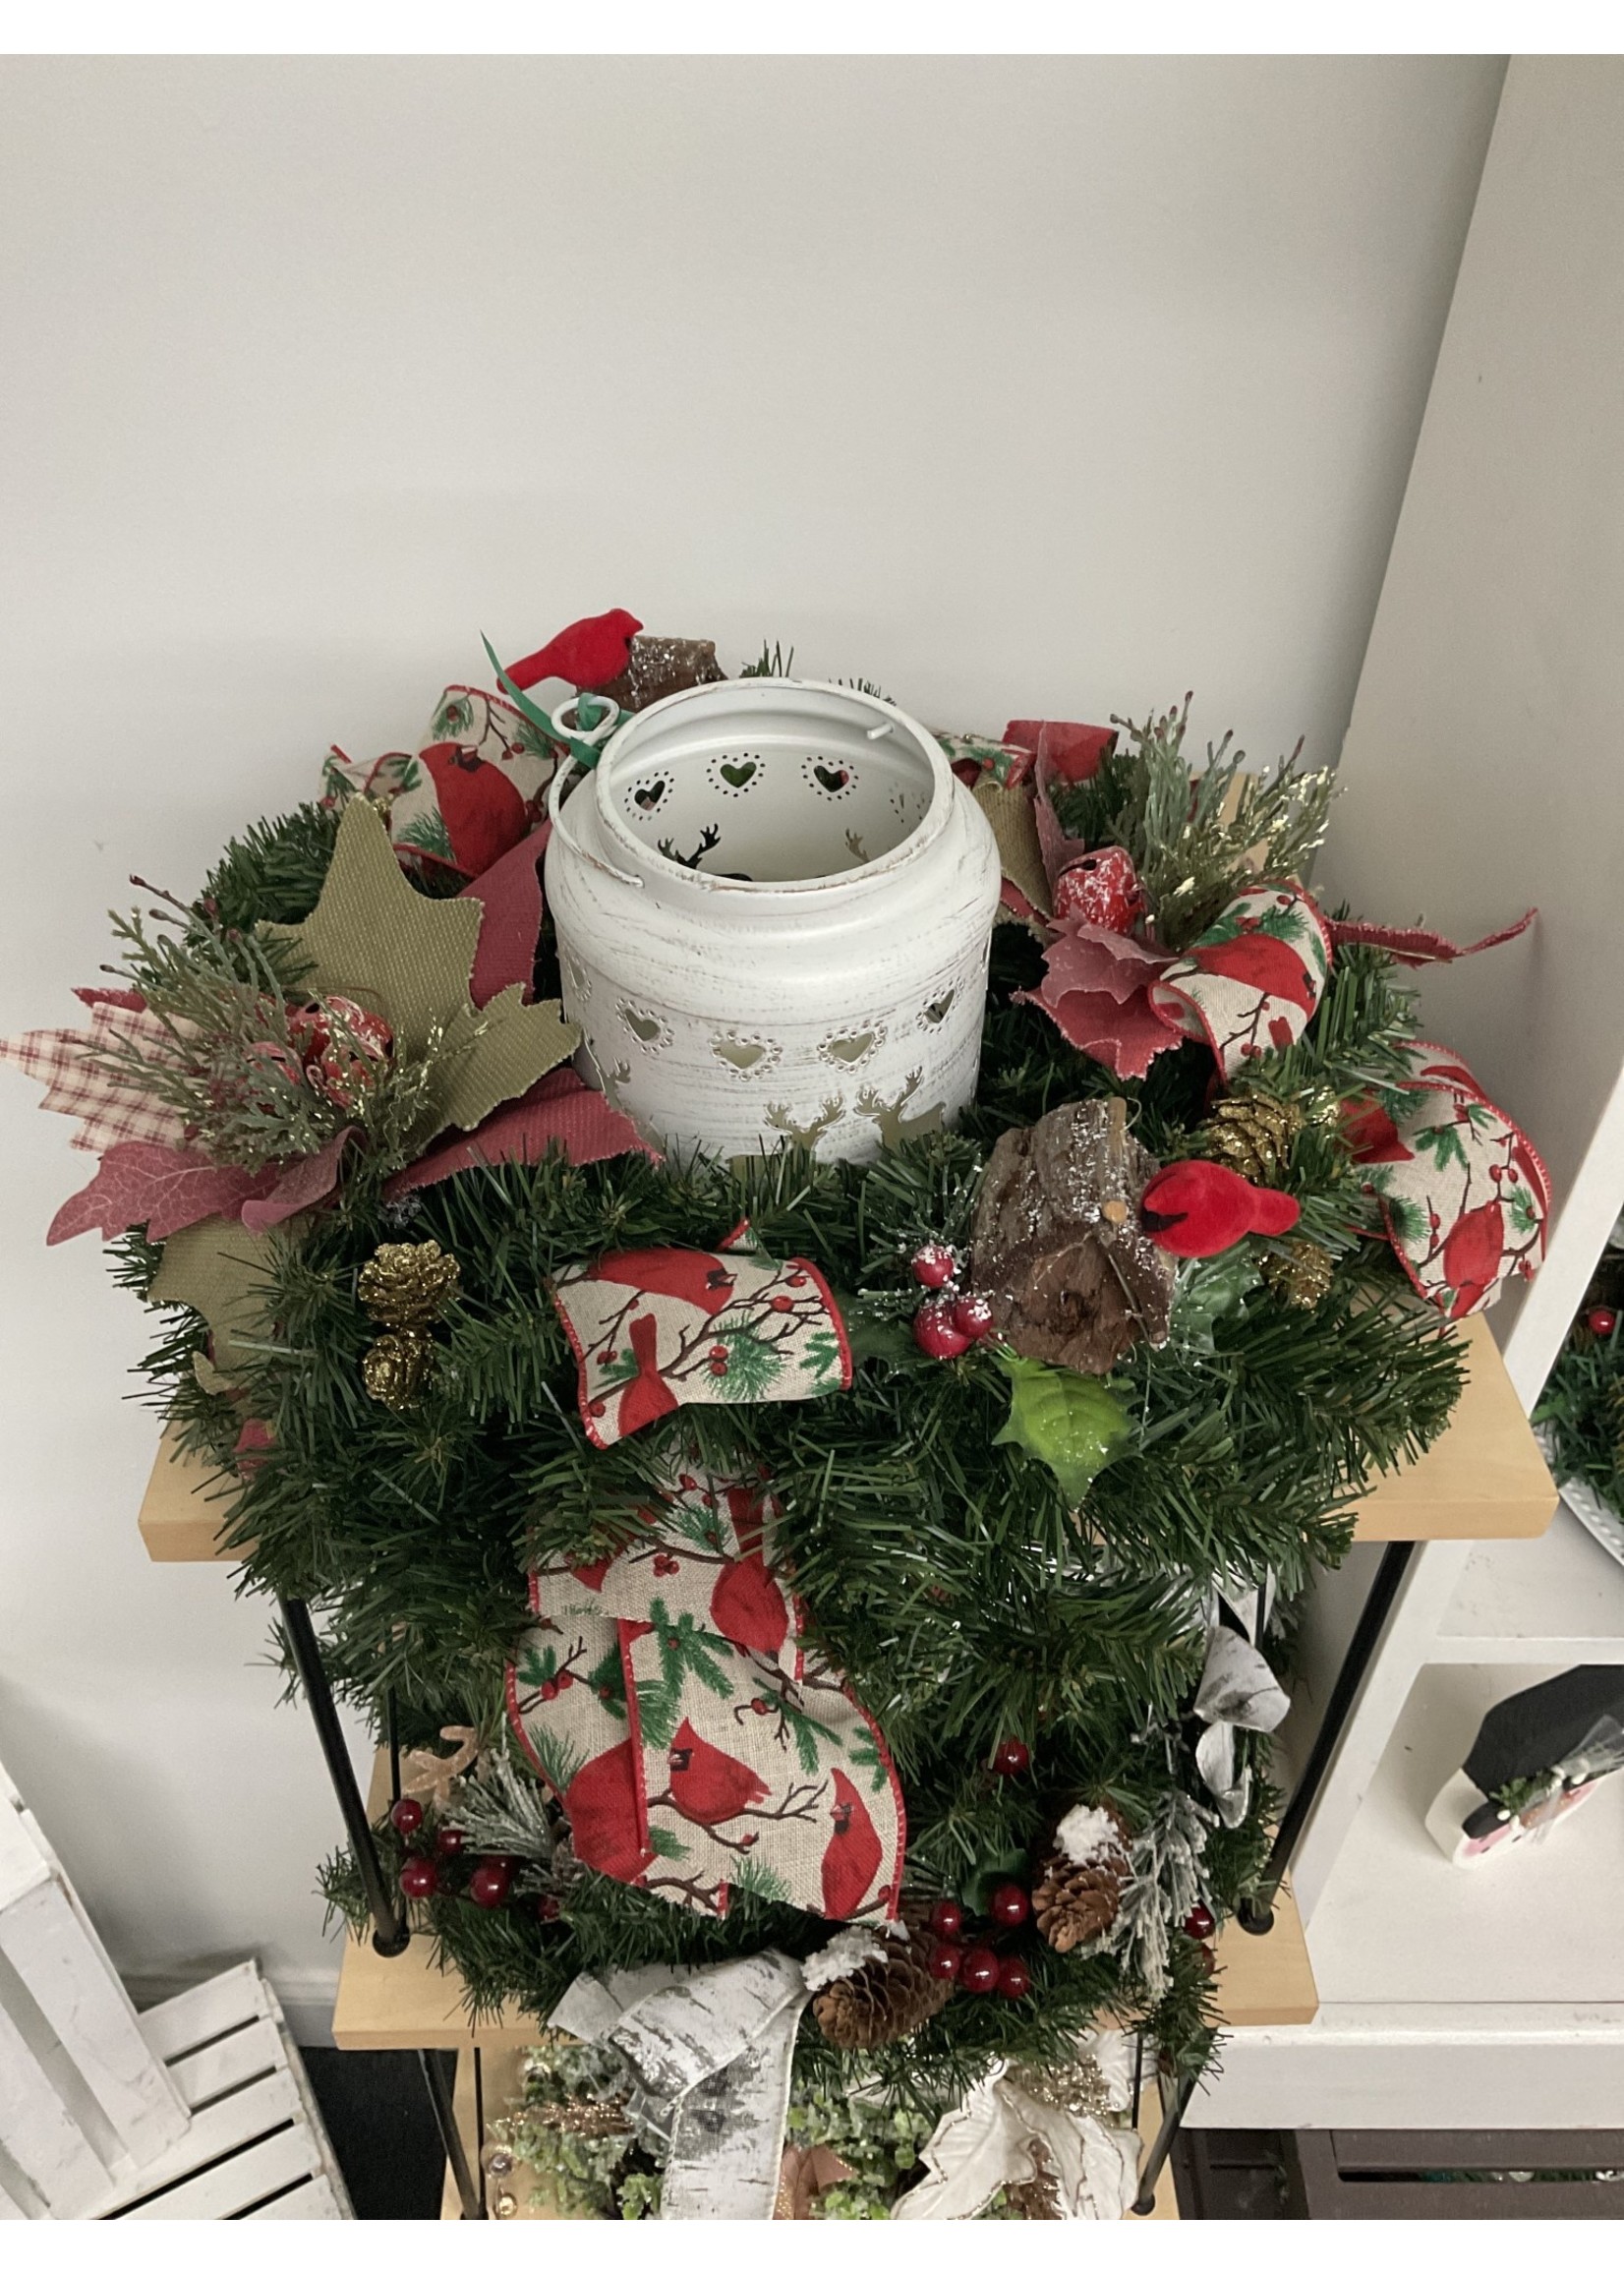 My New Favorite Thing Centerpiece White Reindeer Lantern w/Greenery, Pinecones, Berries